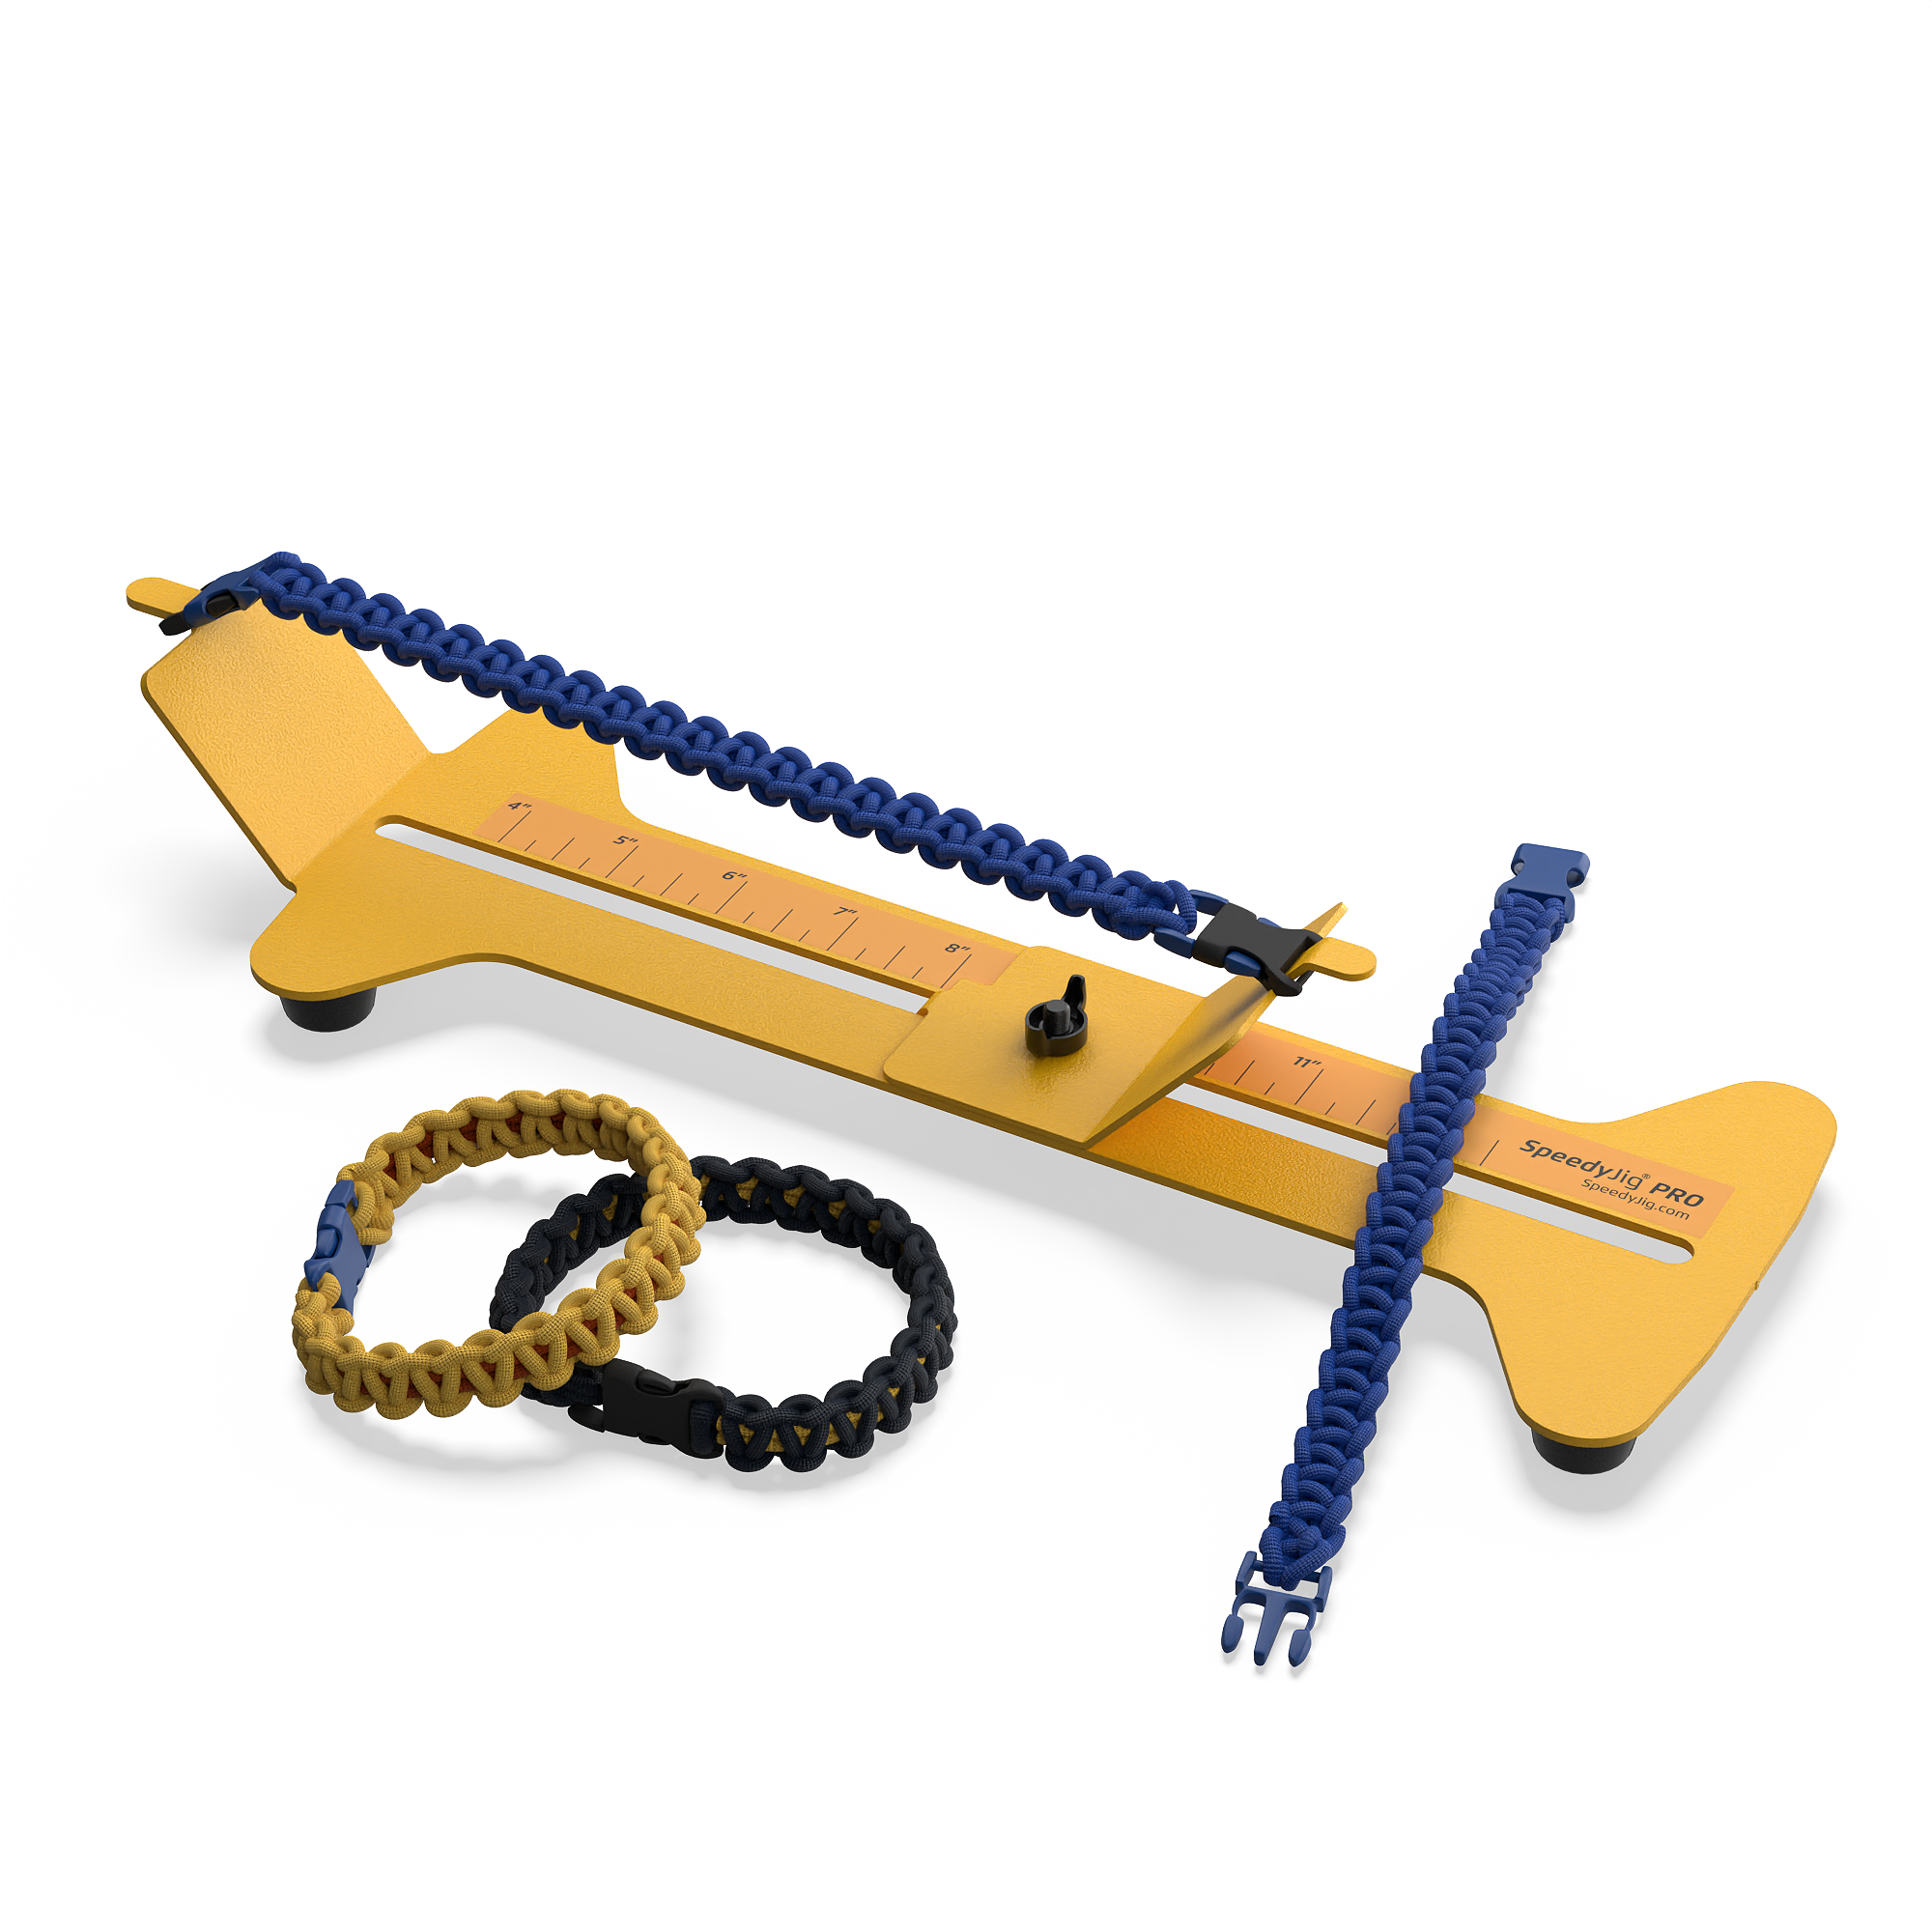 The SpeedyJig XL - Weave bracelets and dog collars up to 18! - Alphidia  SpeedyJig®